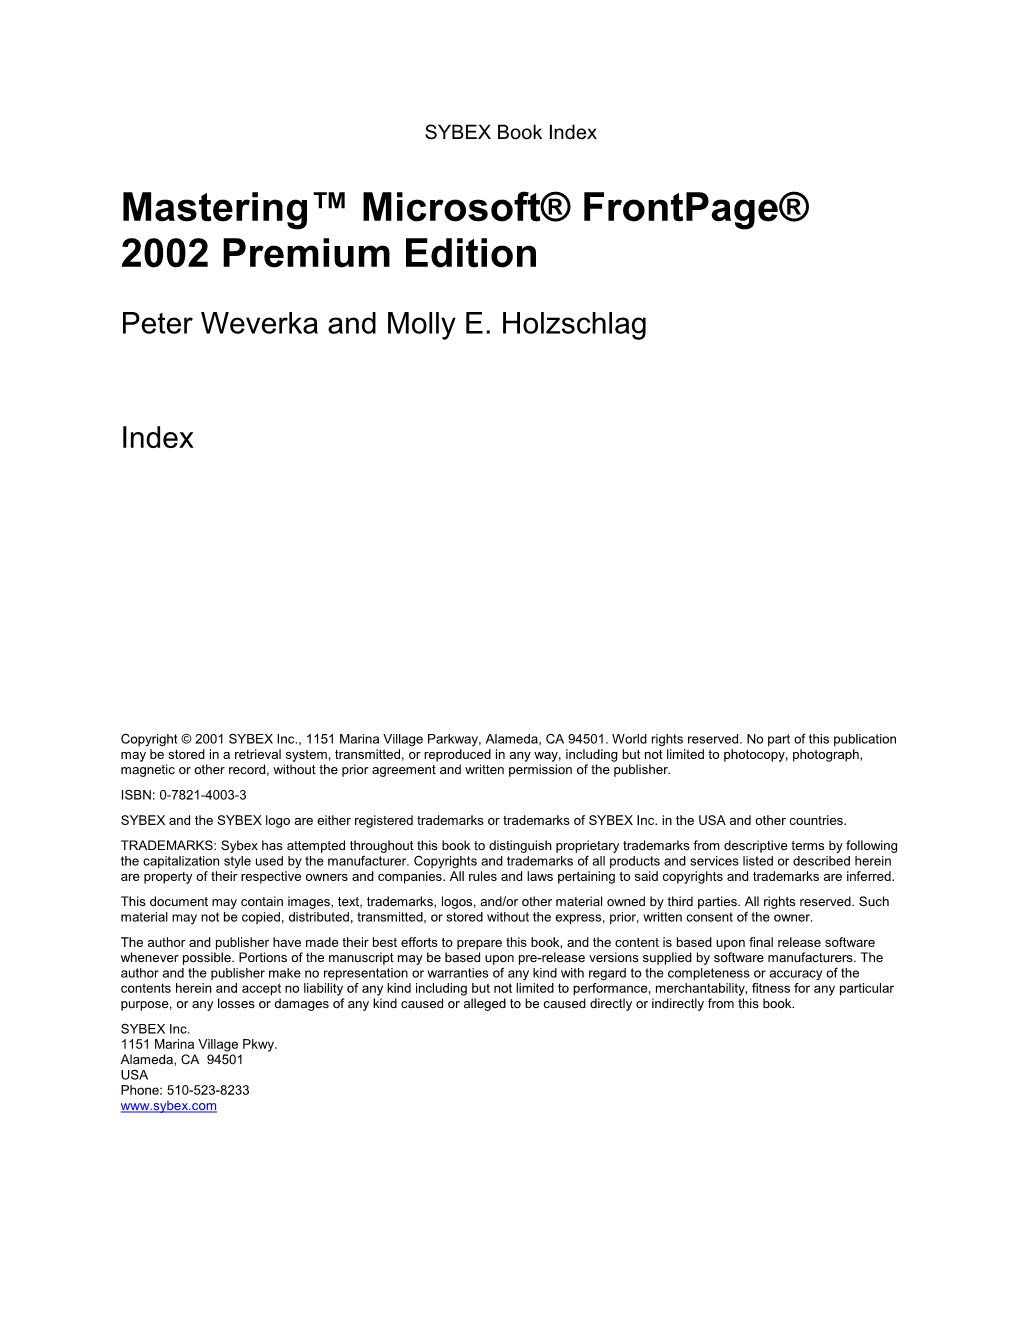 Mastering™ Microsoft® Frontpage® 2002 Premium Edition